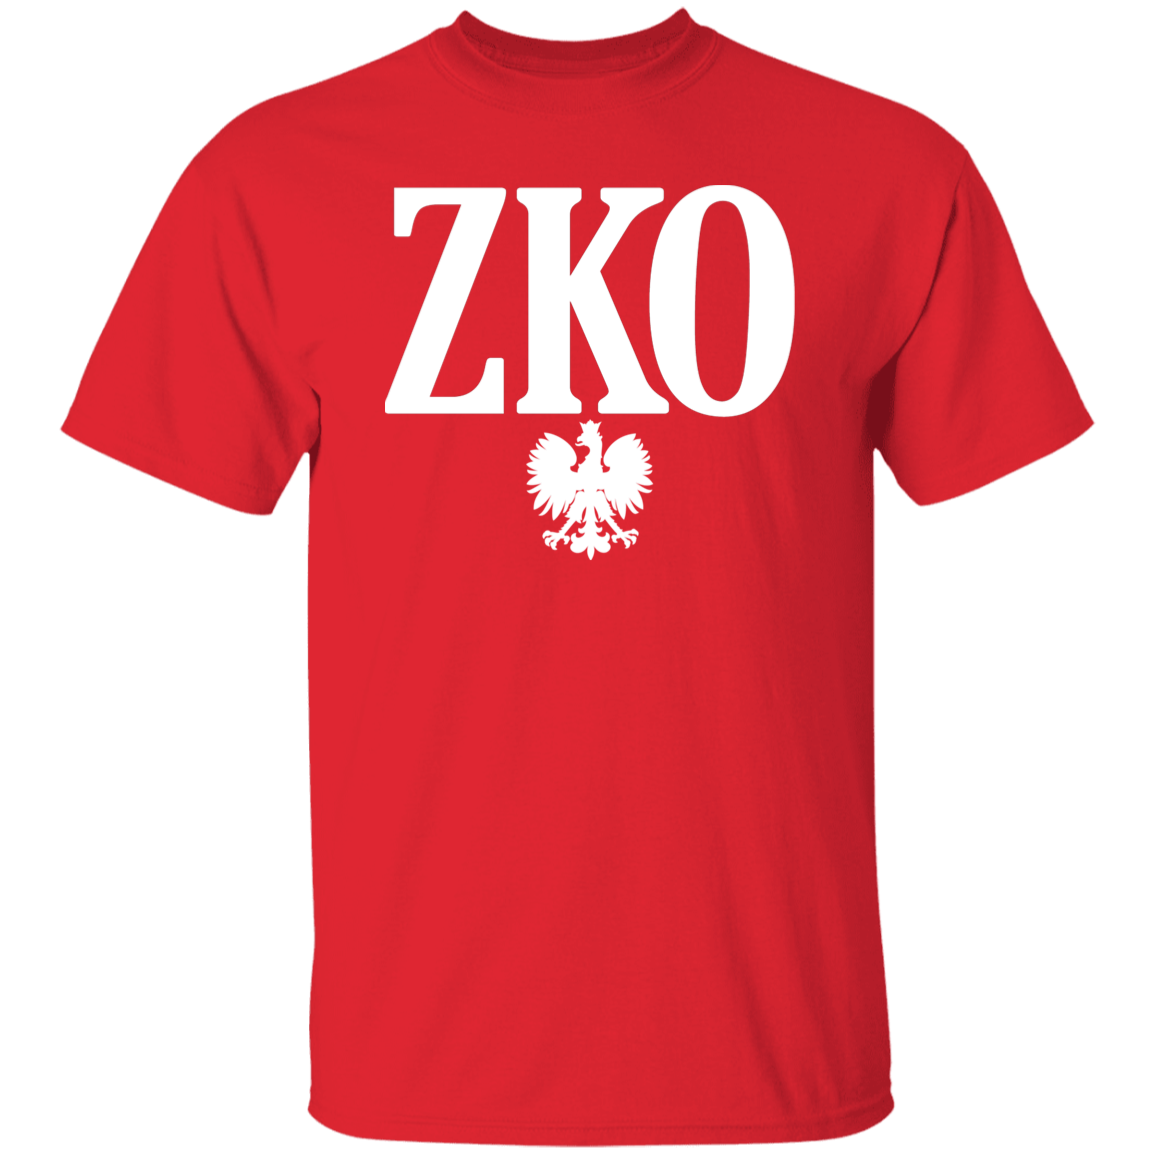 ZKO Polish Surname Ending Apparel CustomCat G500 5.3 oz. T-Shirt Red S